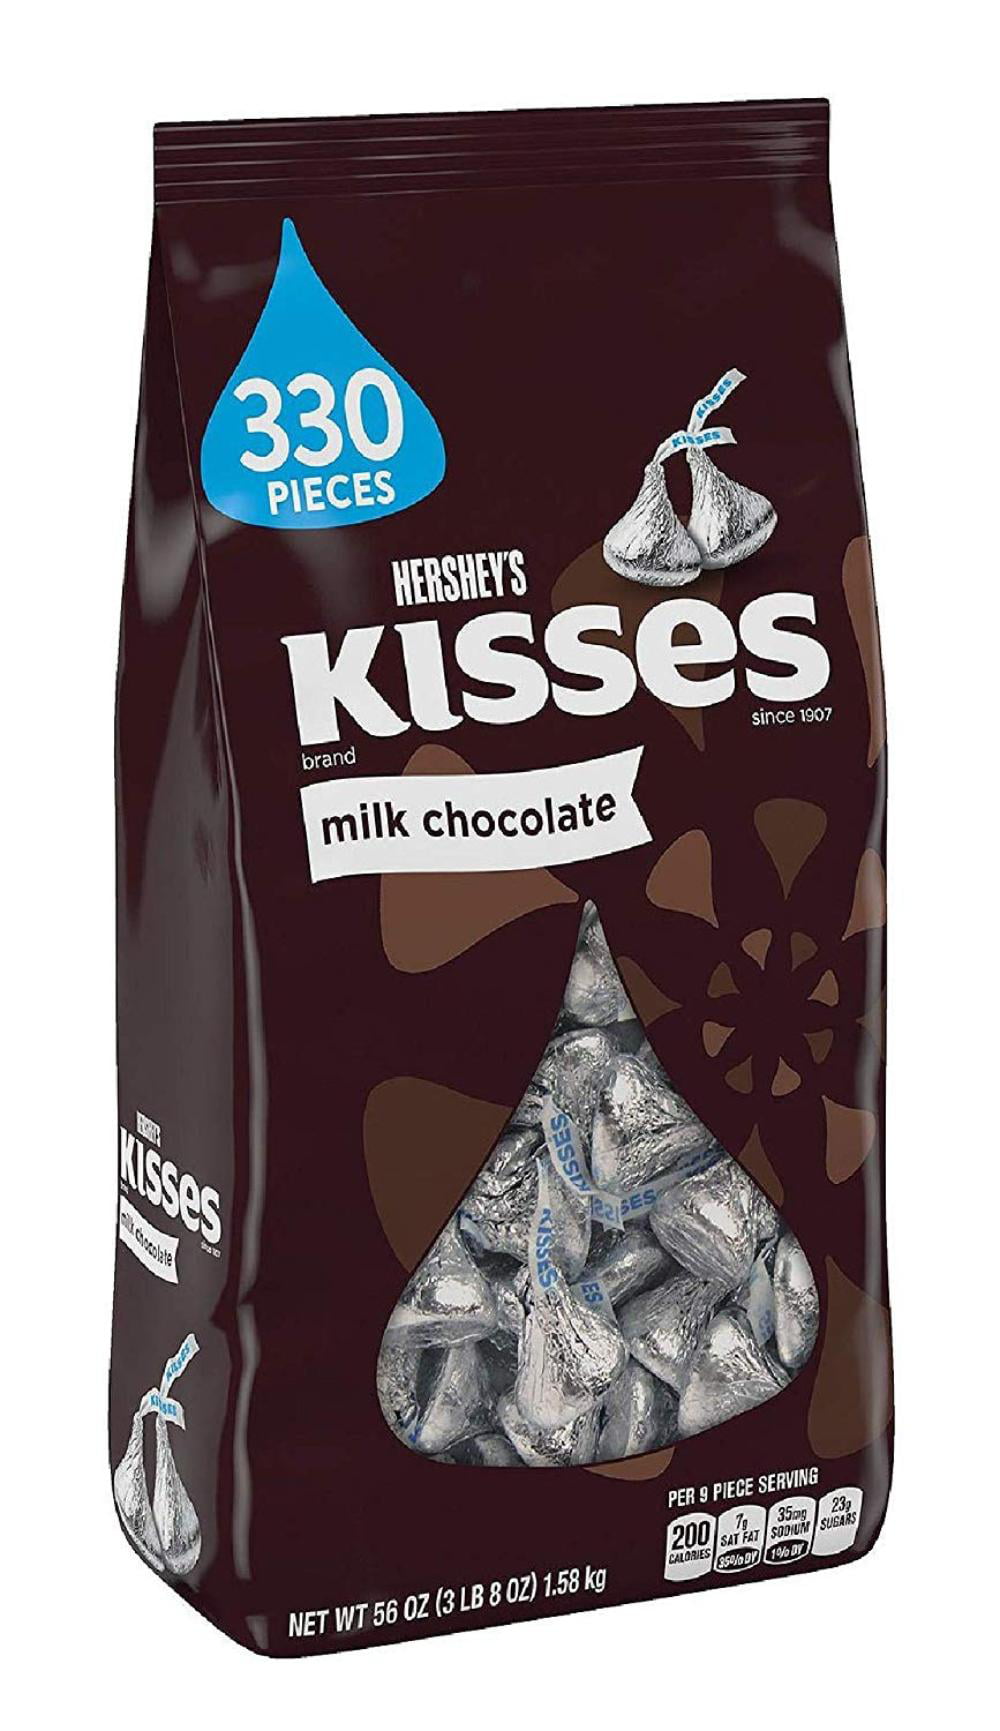 's Kisses - Milk Chocolate: 330 Pieces, Individually ...